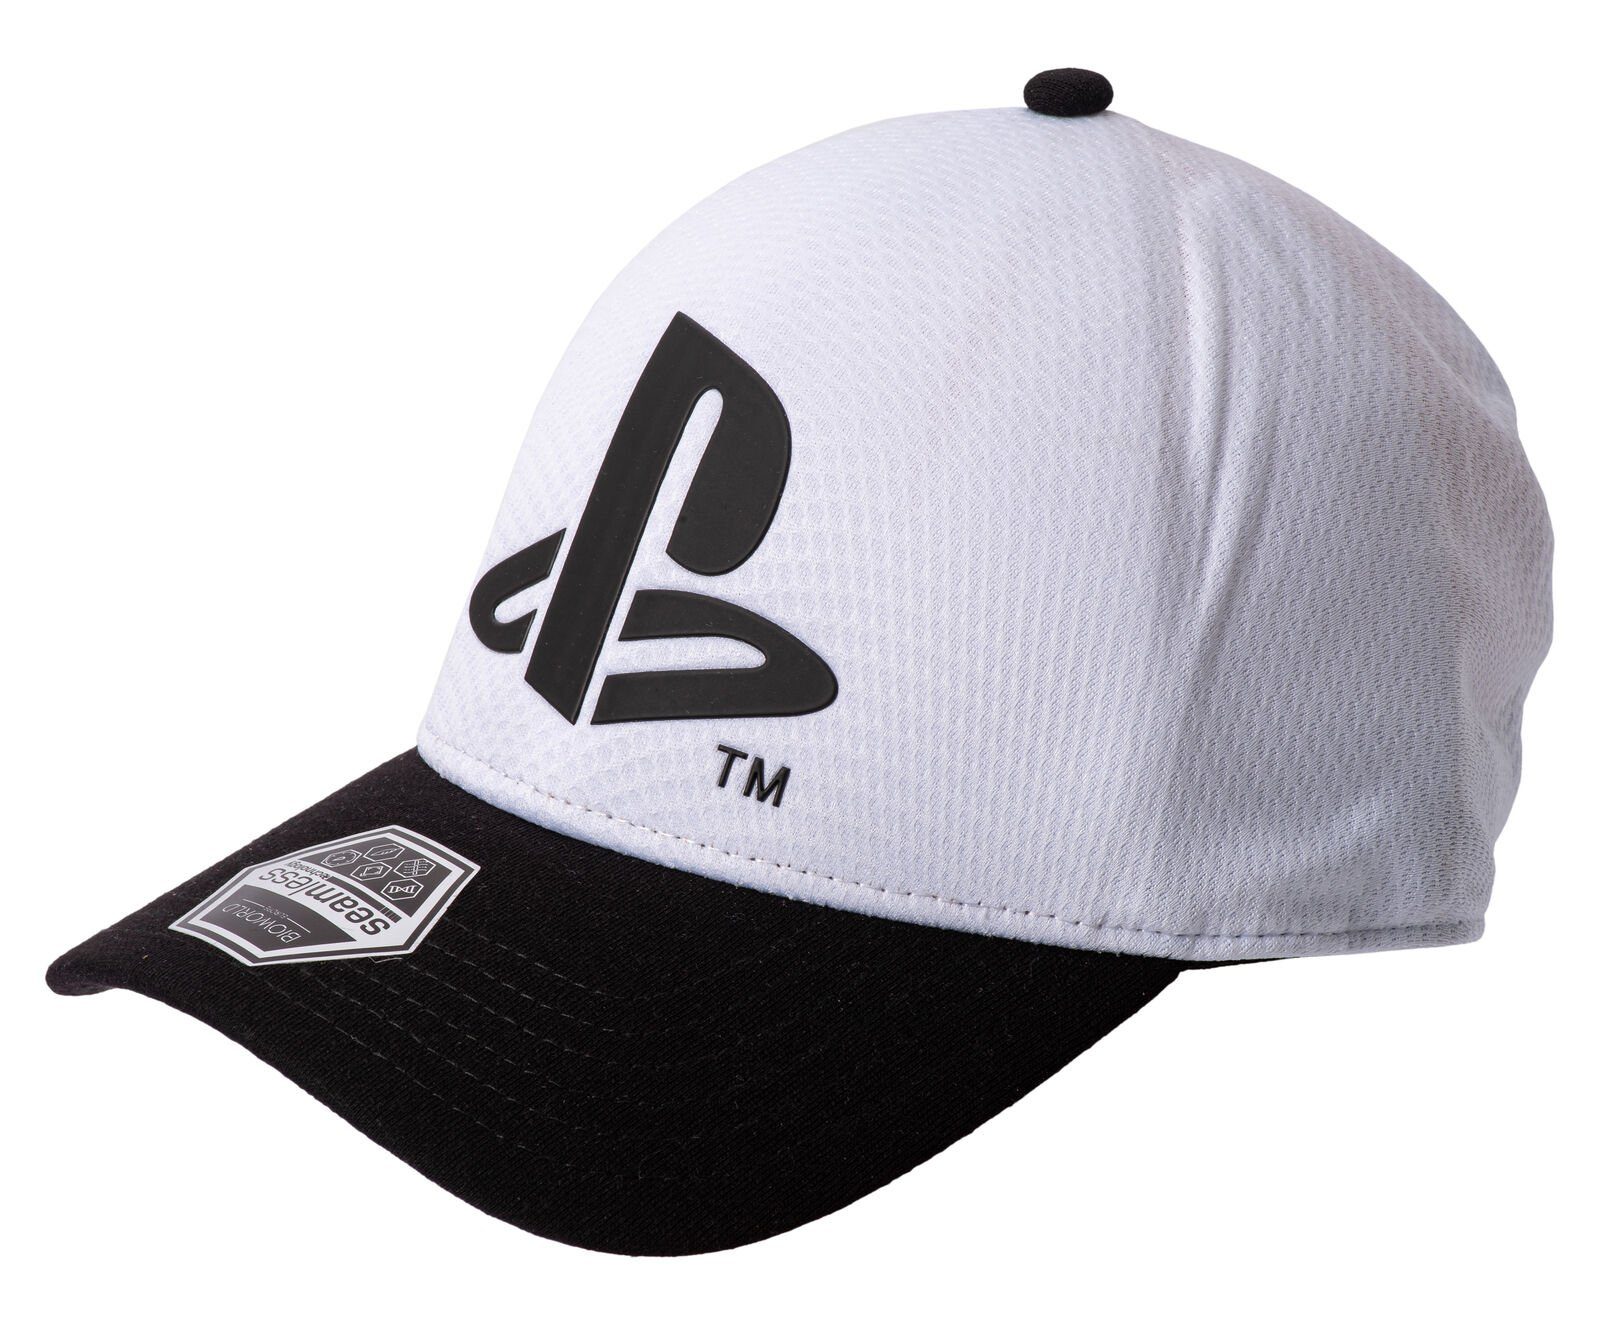 Playstation Baseball Cap PS5 PS4 Cappy Gaming PLAYSTATION Baseballcap Schirmmütze schwarz - weiß